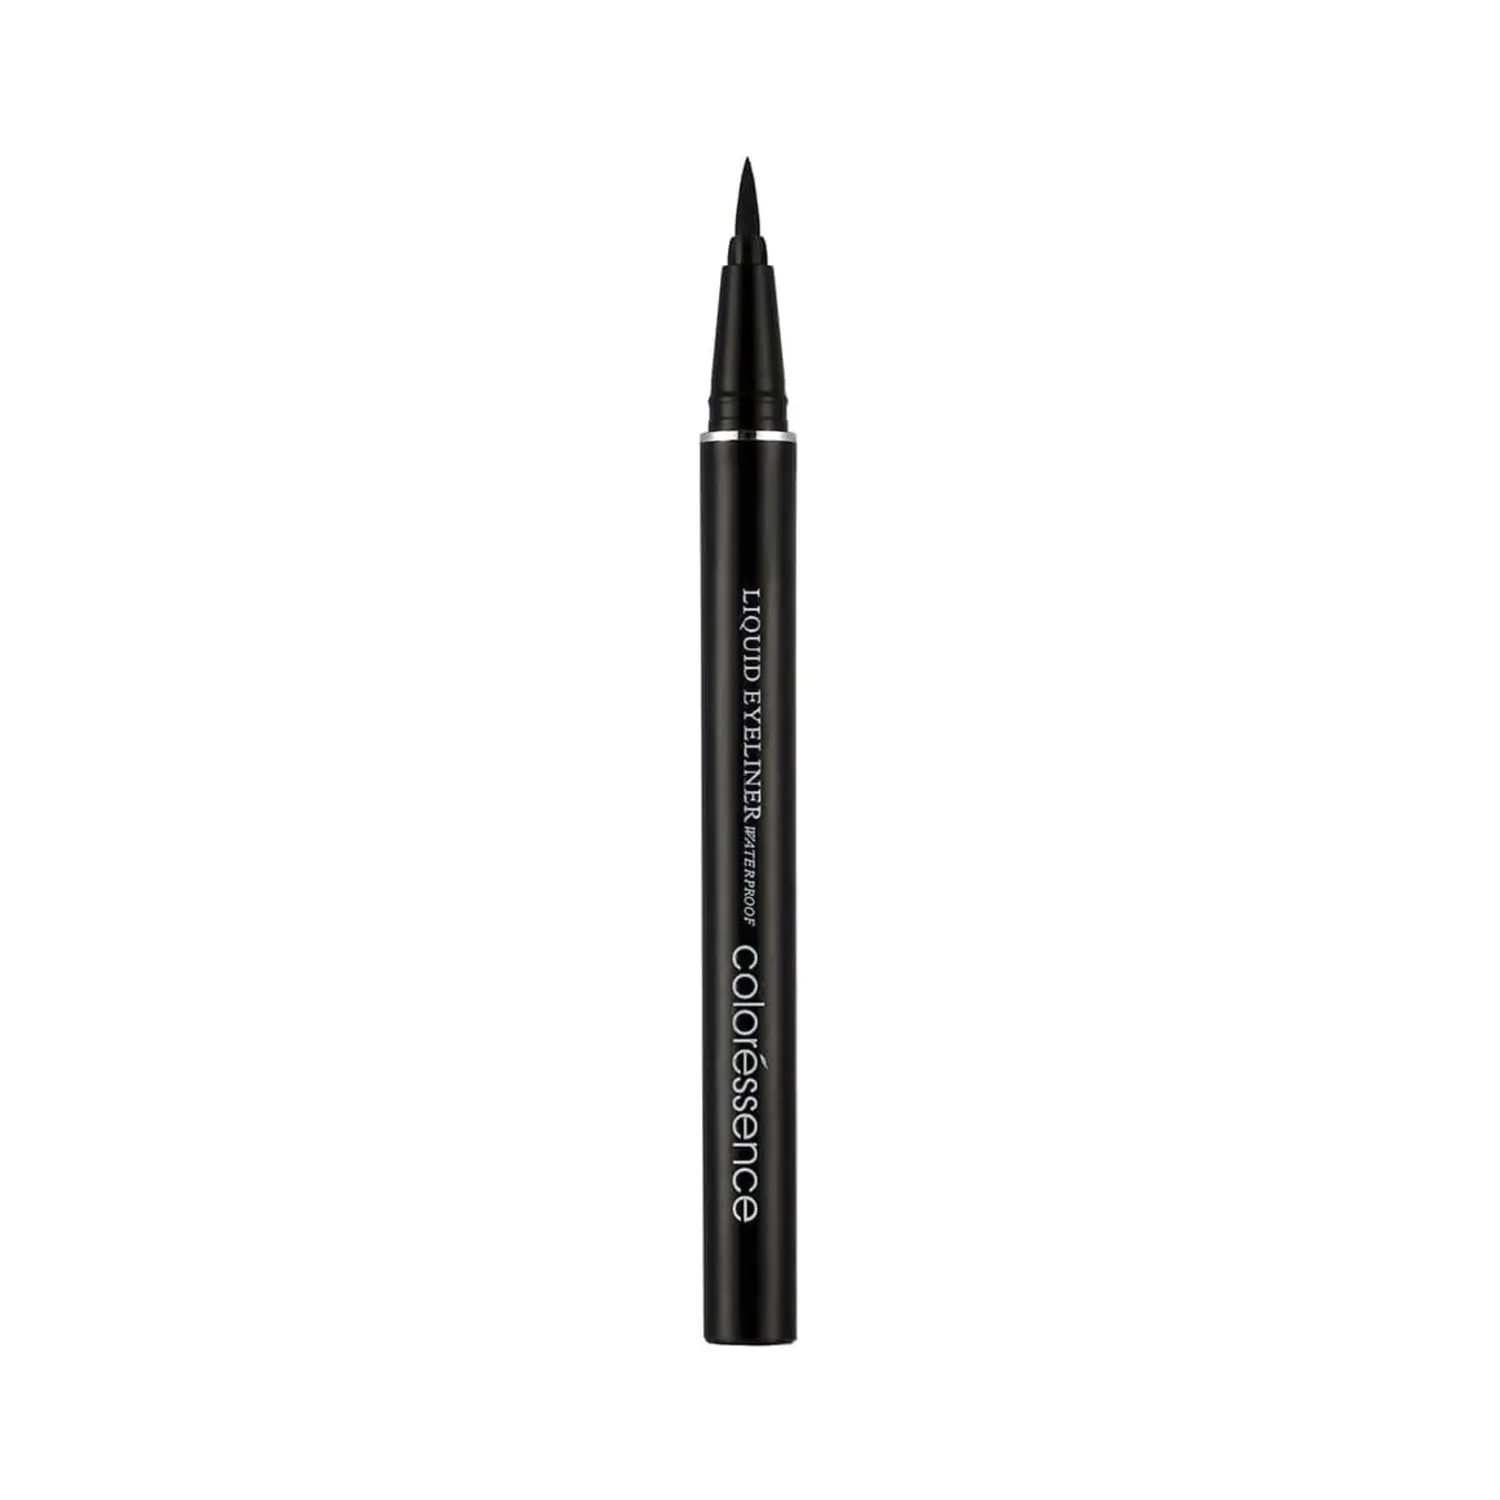 Coloressence | Coloressence Ink Stylo Eyeliner Sketch Pen Style Waterproof Long Lasting Formula - Black (1g)